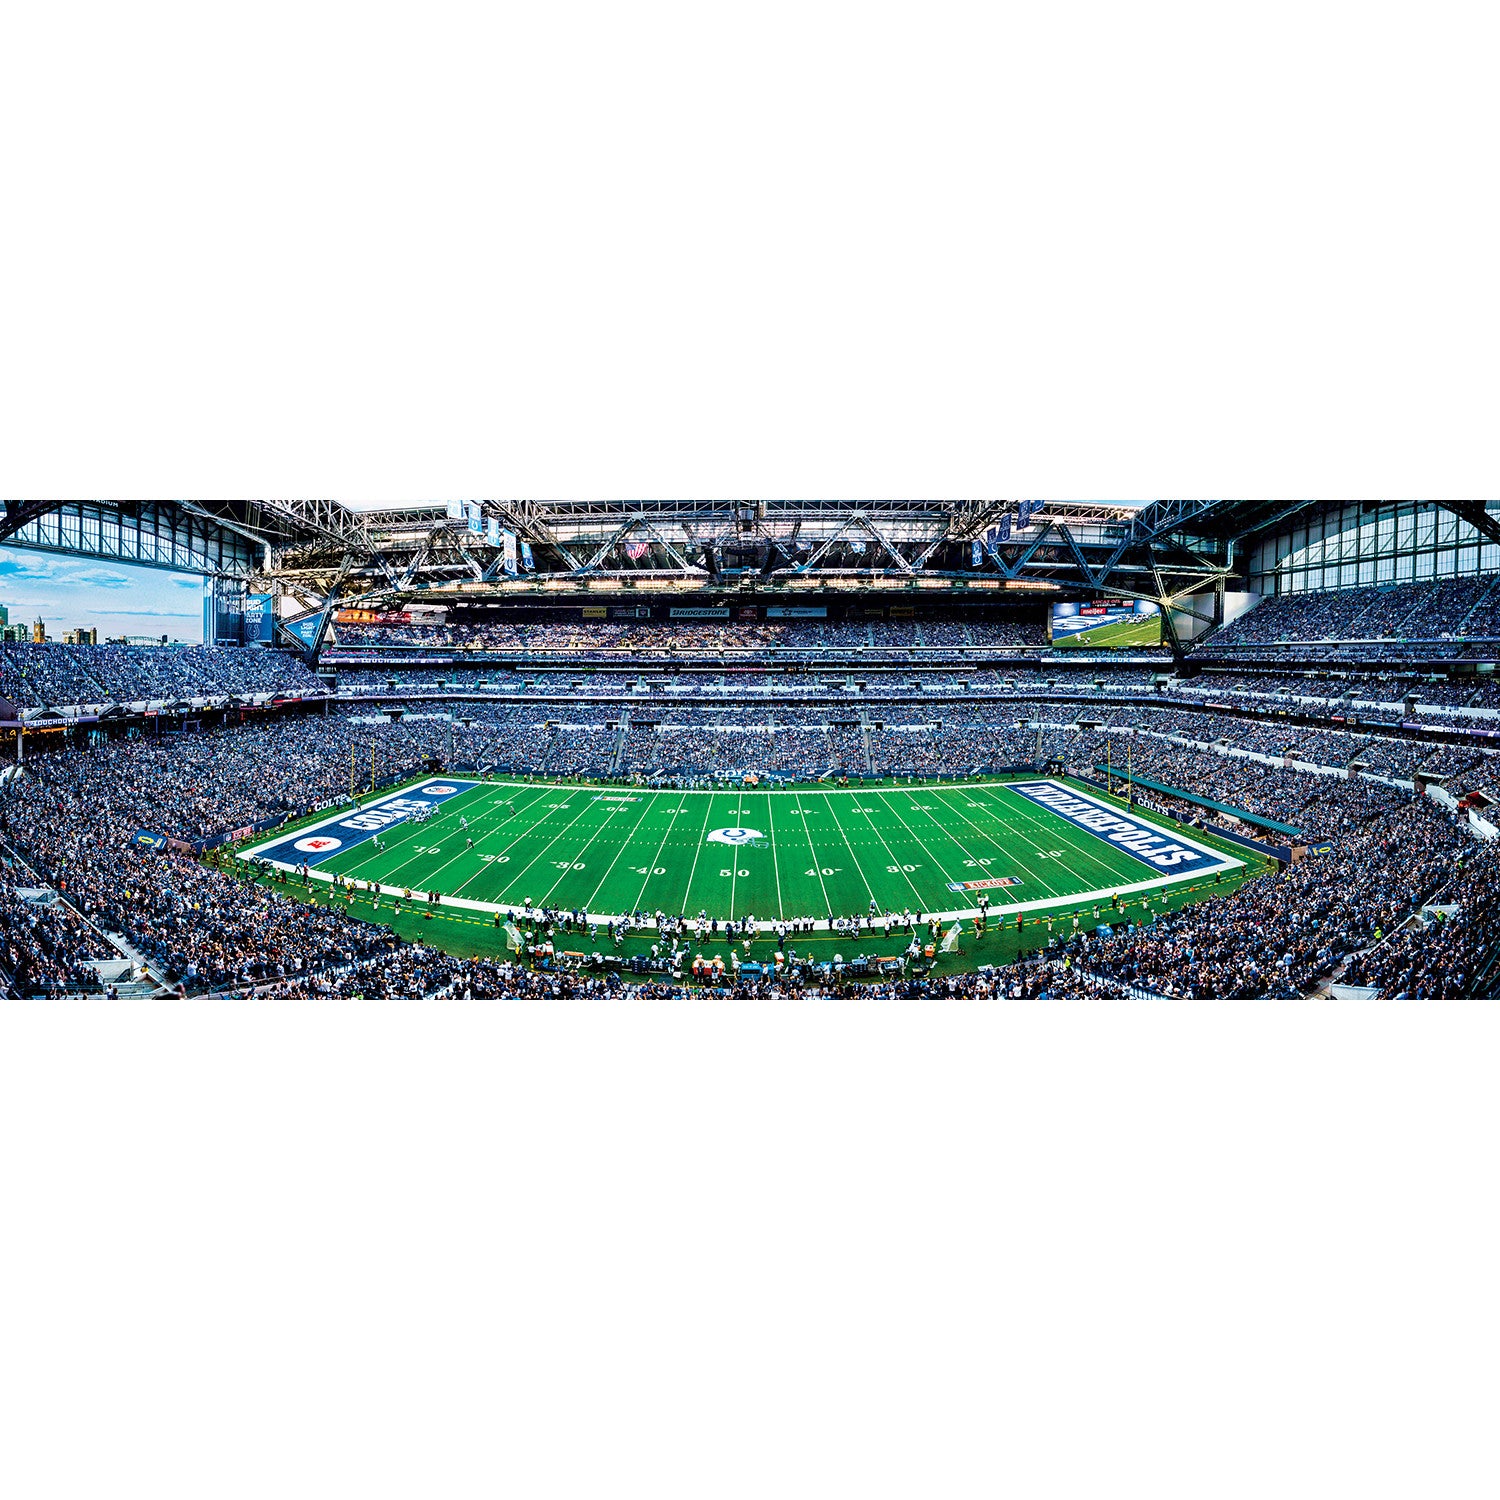 Indianapolis Colts Lucas Oil Mini BRXLZ Stadium 3D Puzzle